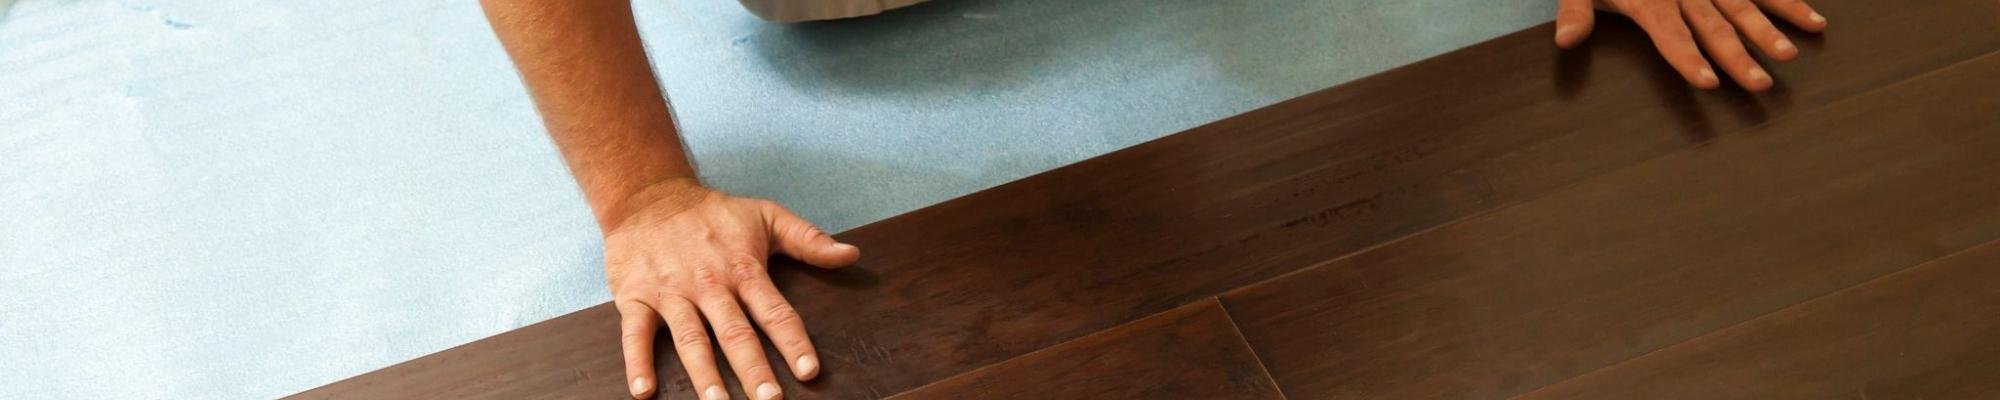 person installing flooring planks